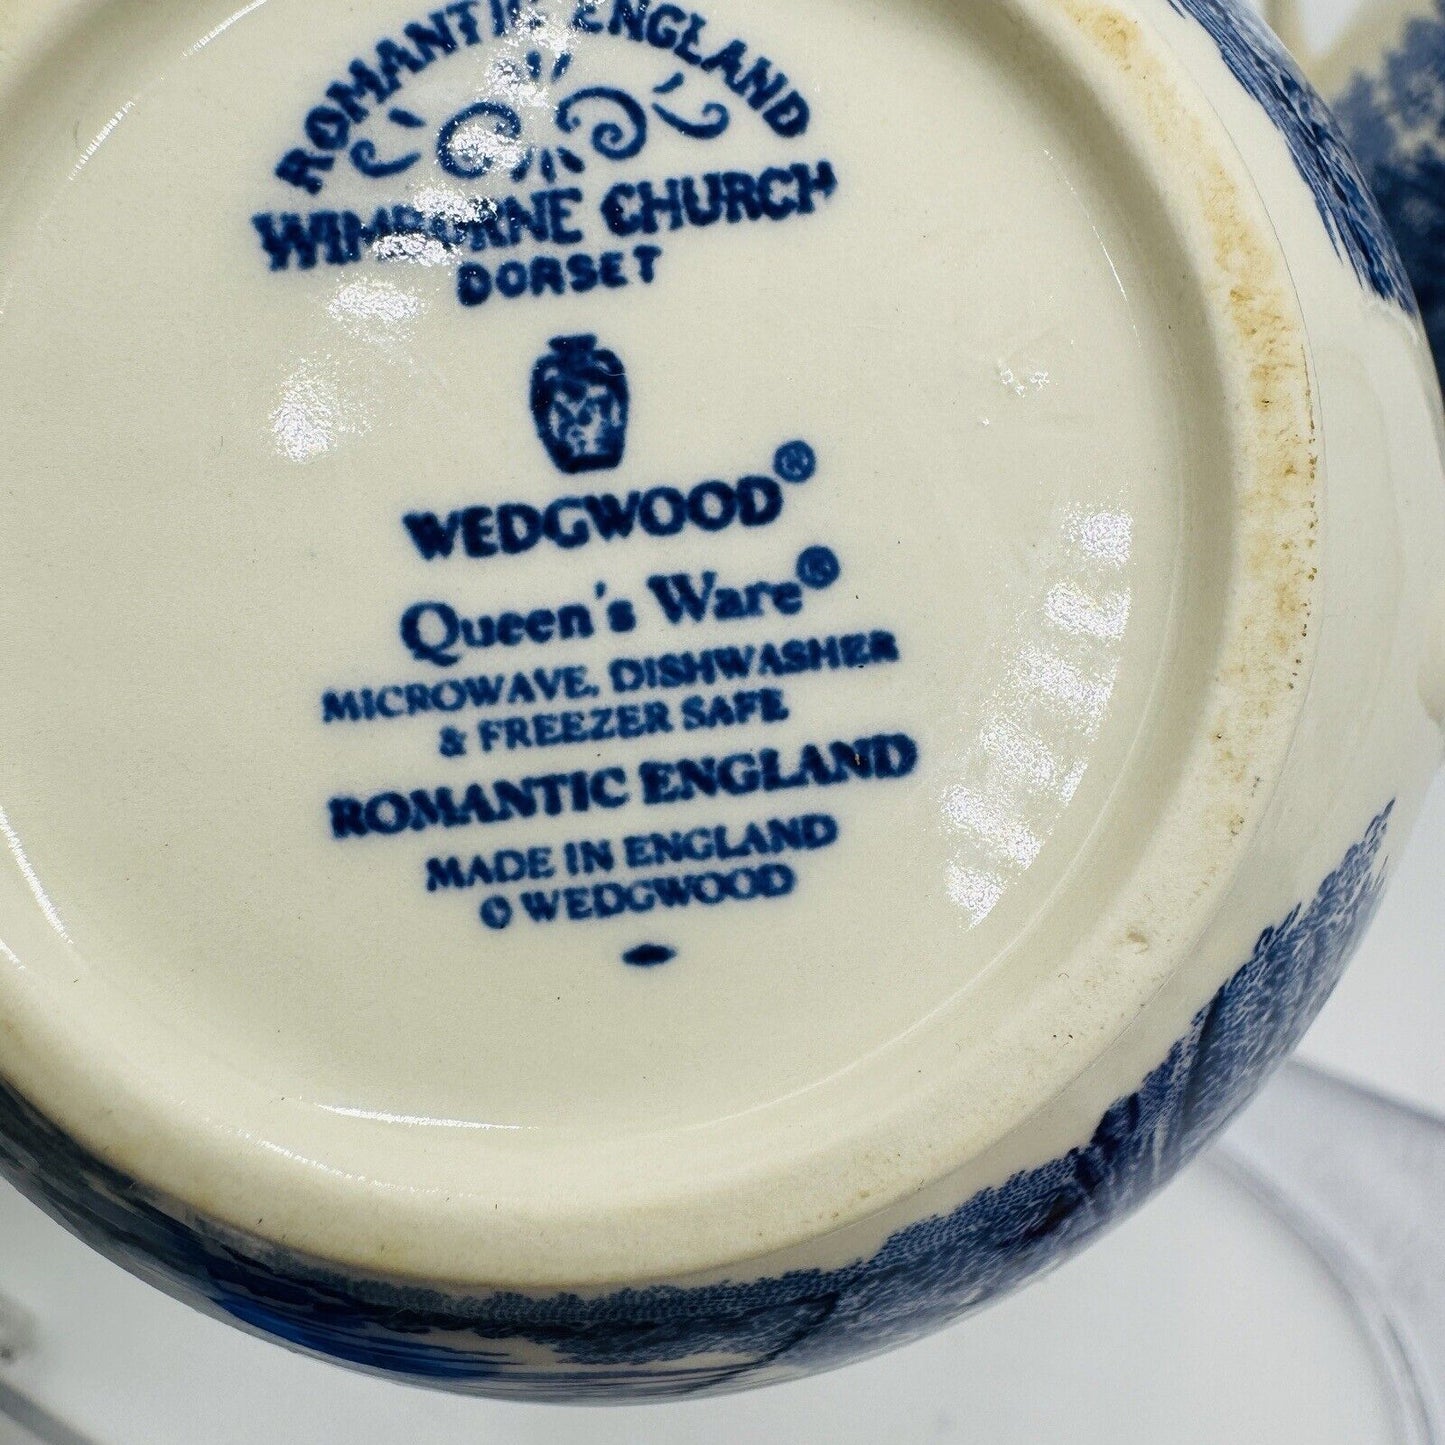 Vintage Wedgwood Romantic England Queen's Ware Set Pitcher & Creamer